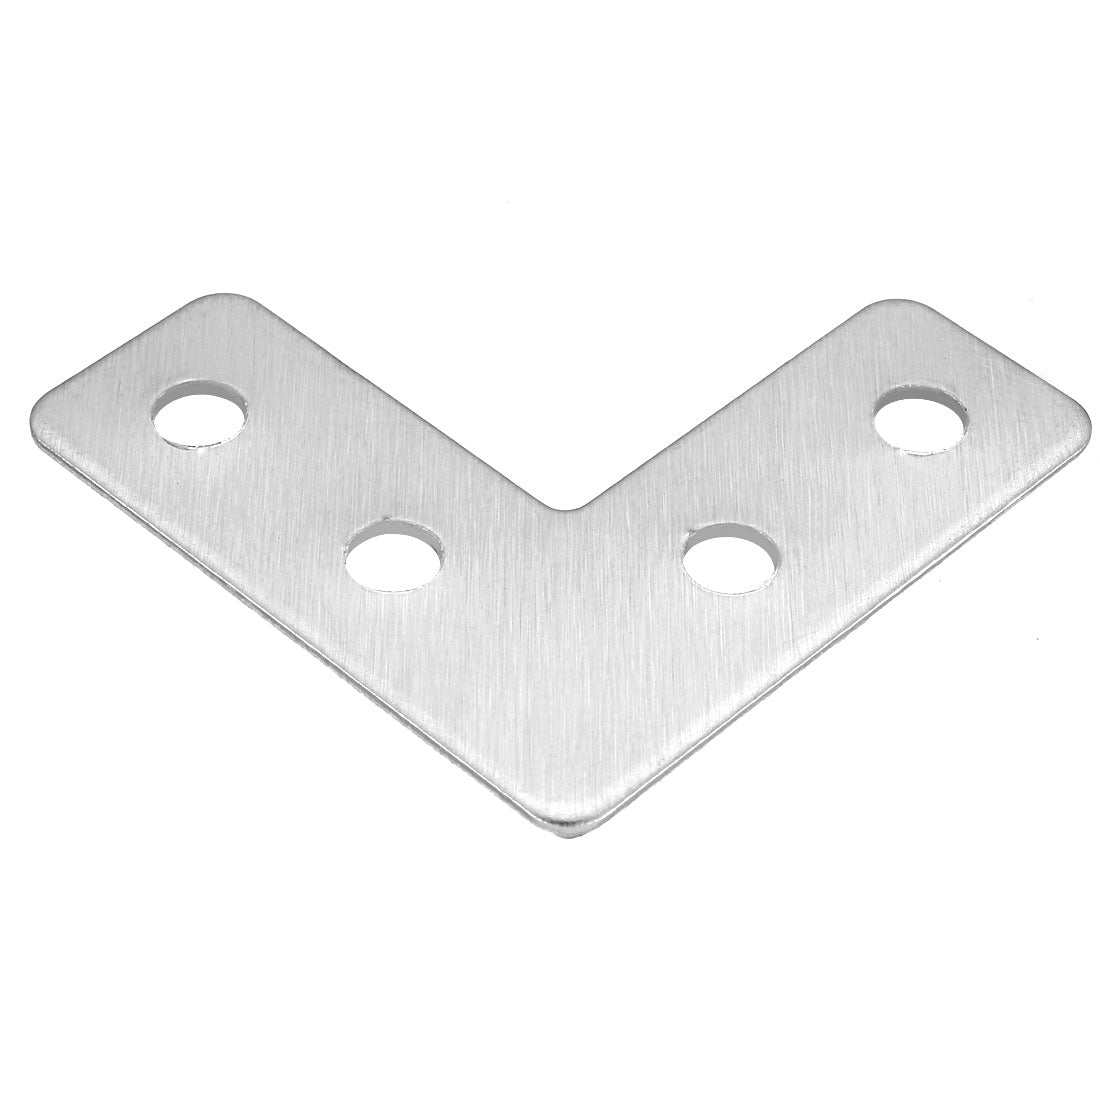 uxcell Uxcell Flat Plate L Shape, 40mmx40mm, Angle Corner Brace Repair Brackets 10pcs